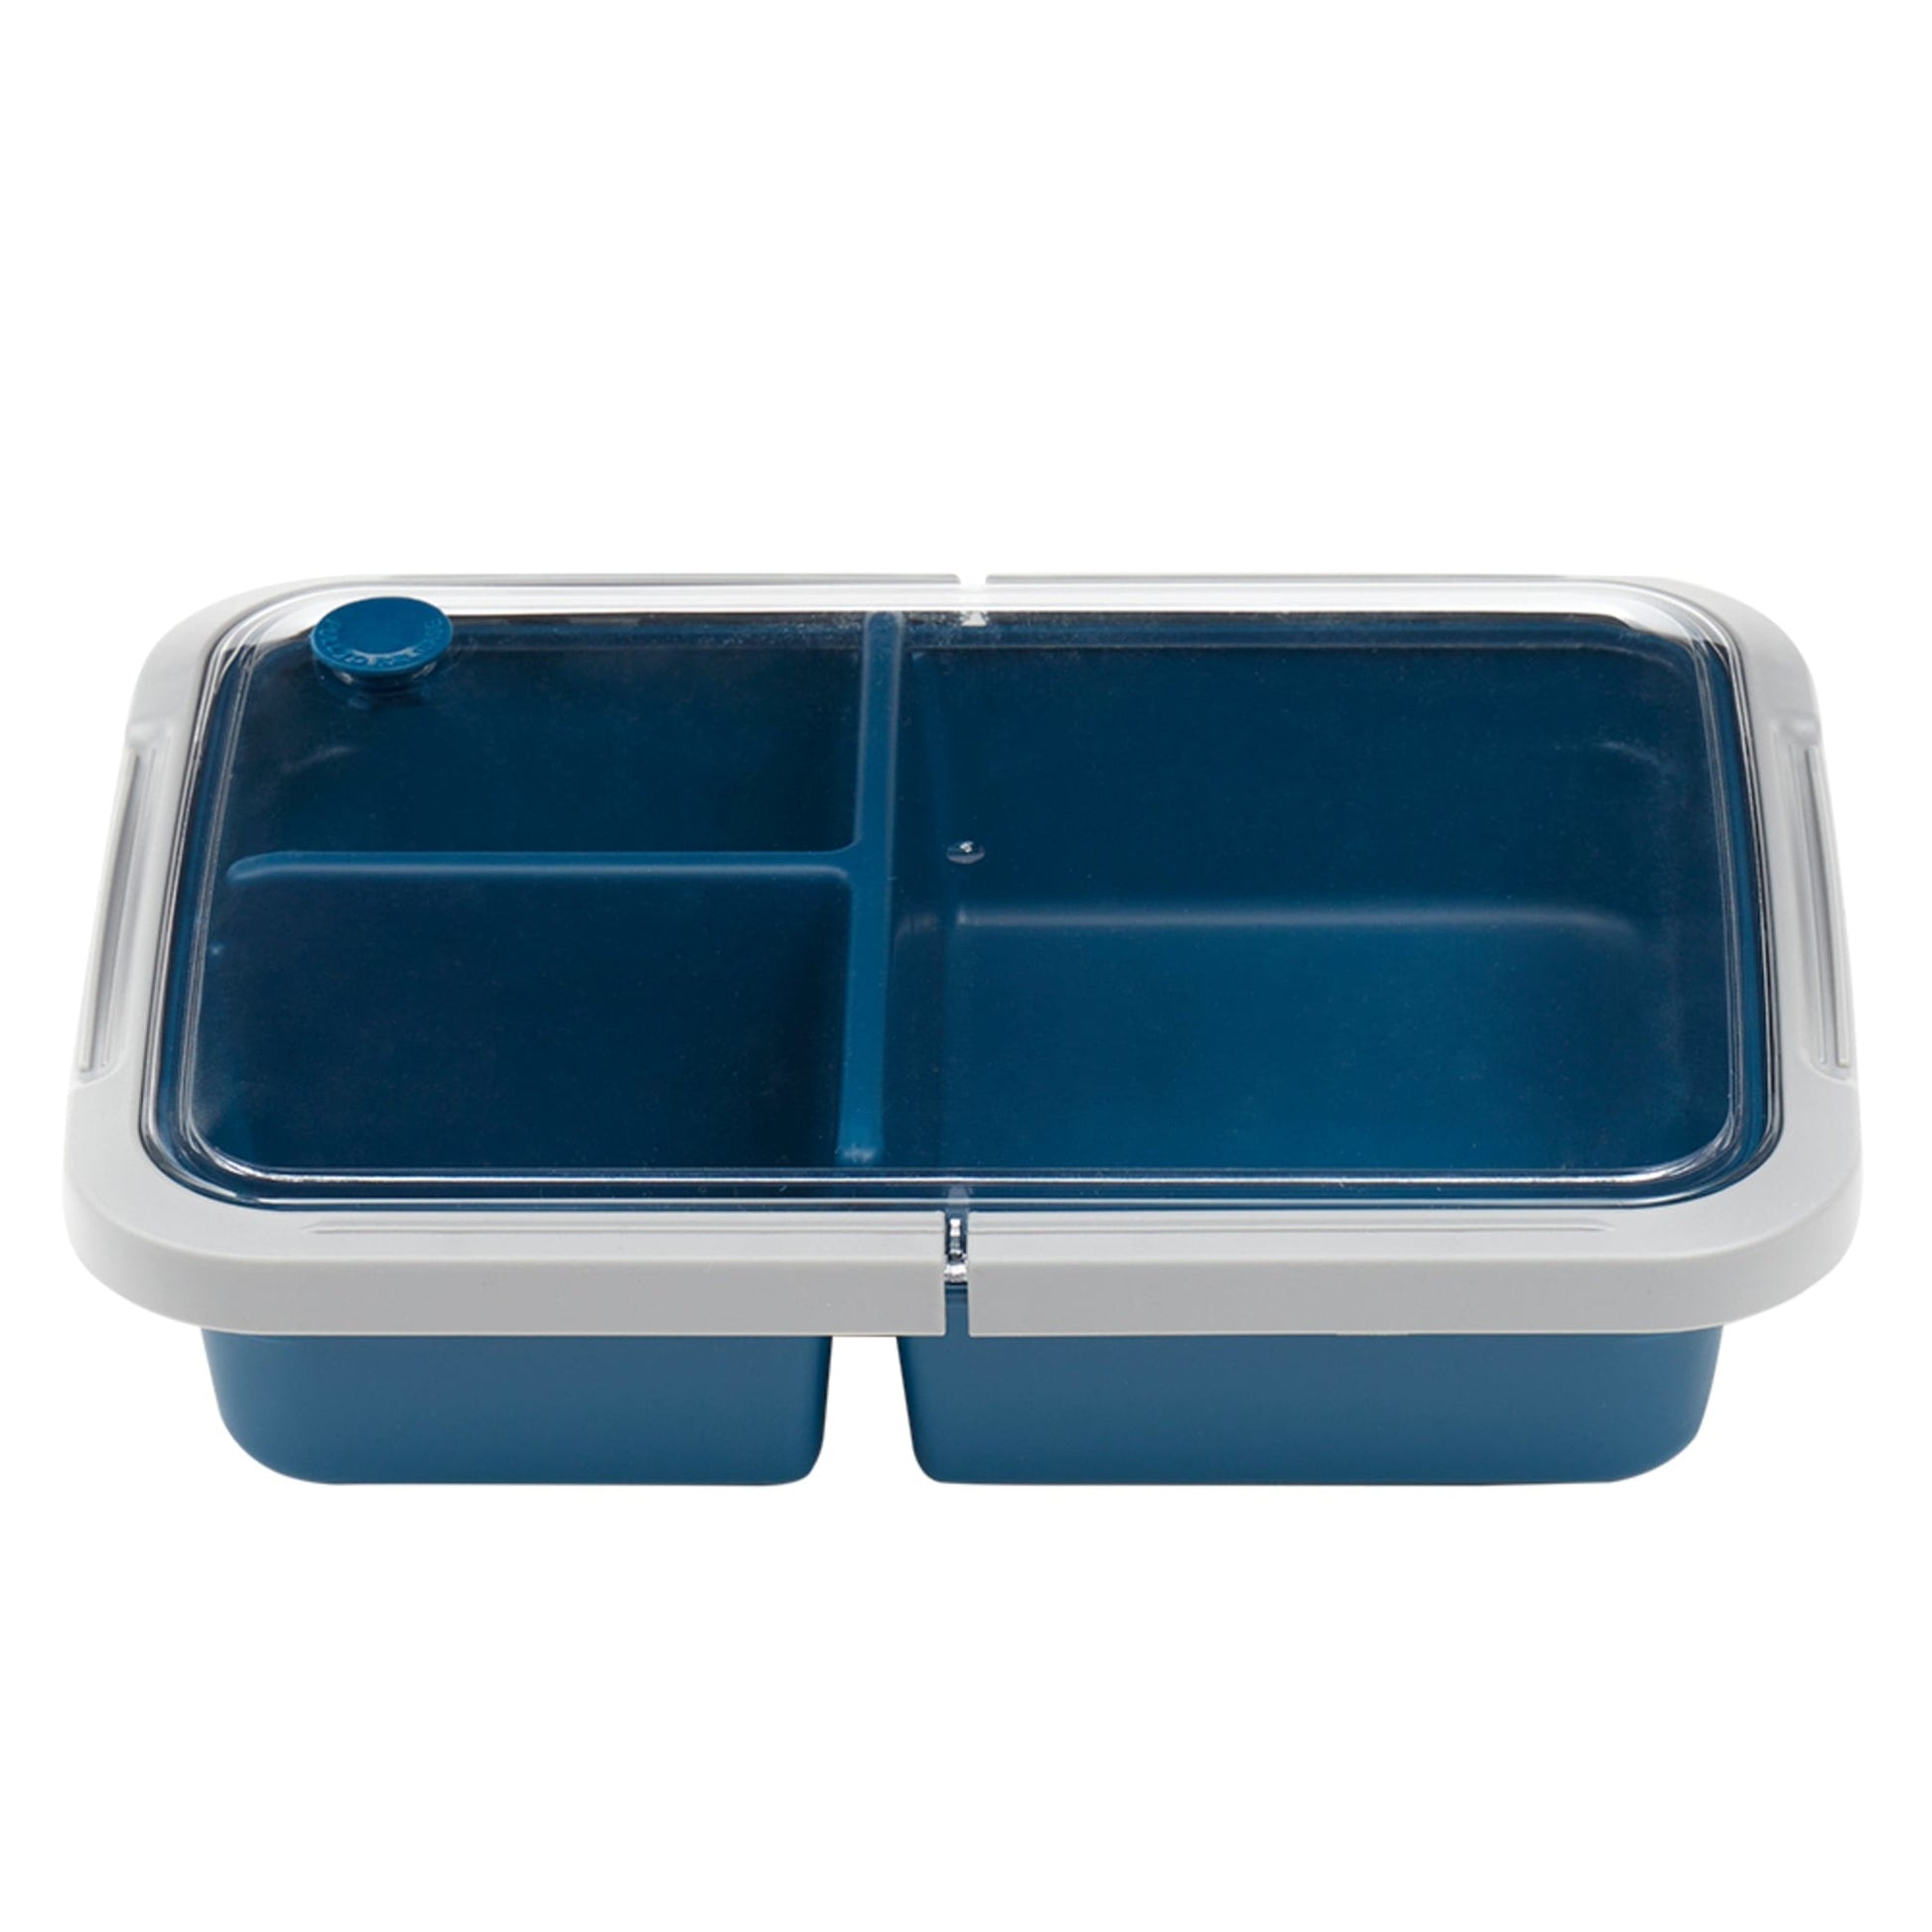 Foam Lunch Box 3 Compartments 2,40x2,10x0,70cm (125 Units)